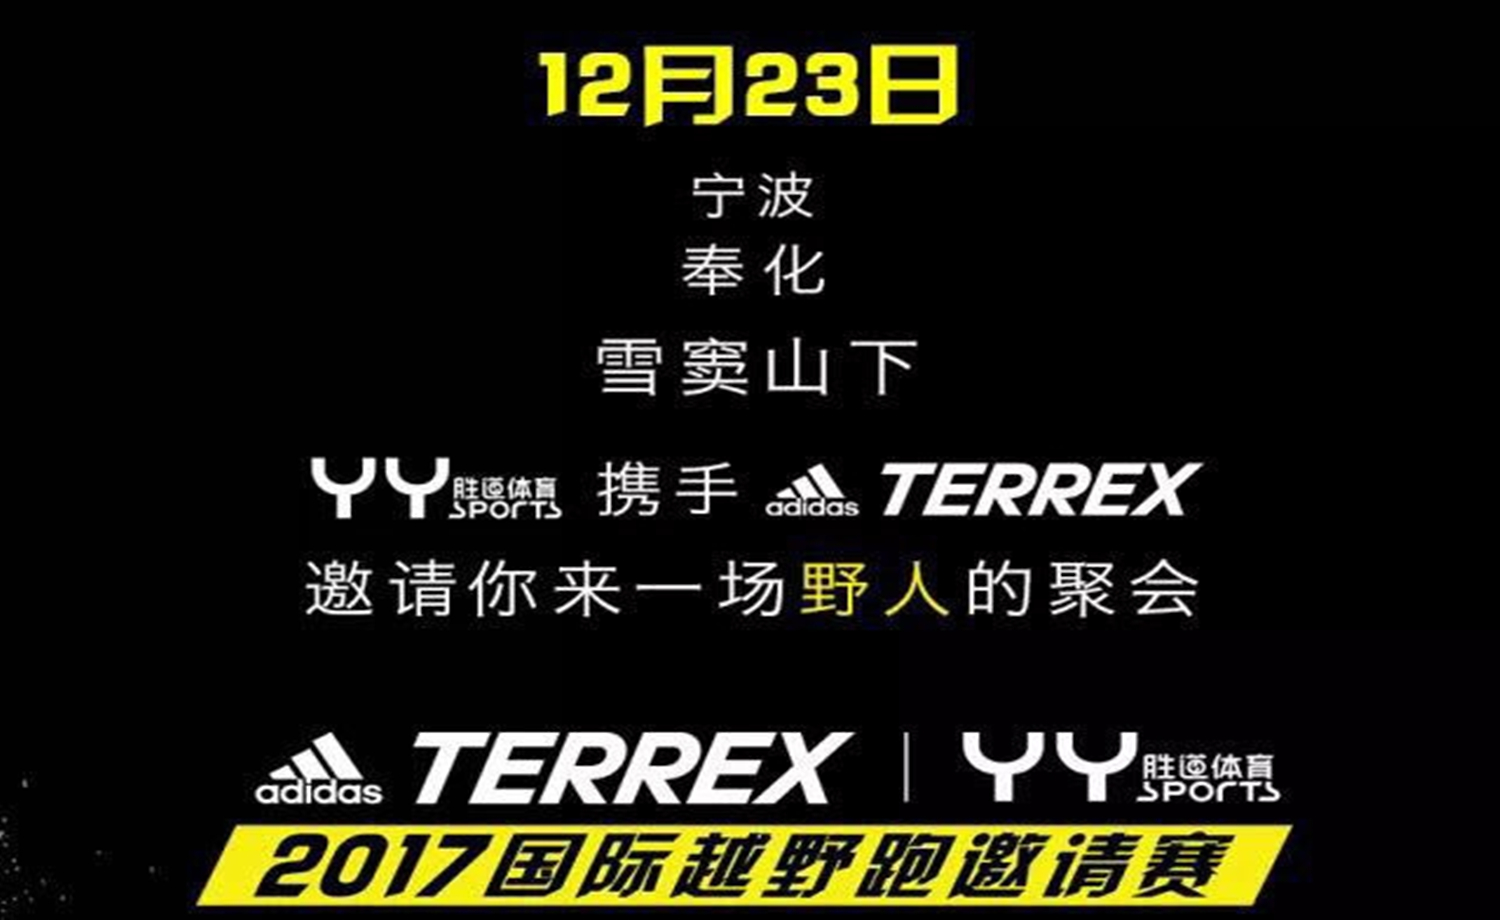 adidas TERREX 2017国际越野跑越野赛